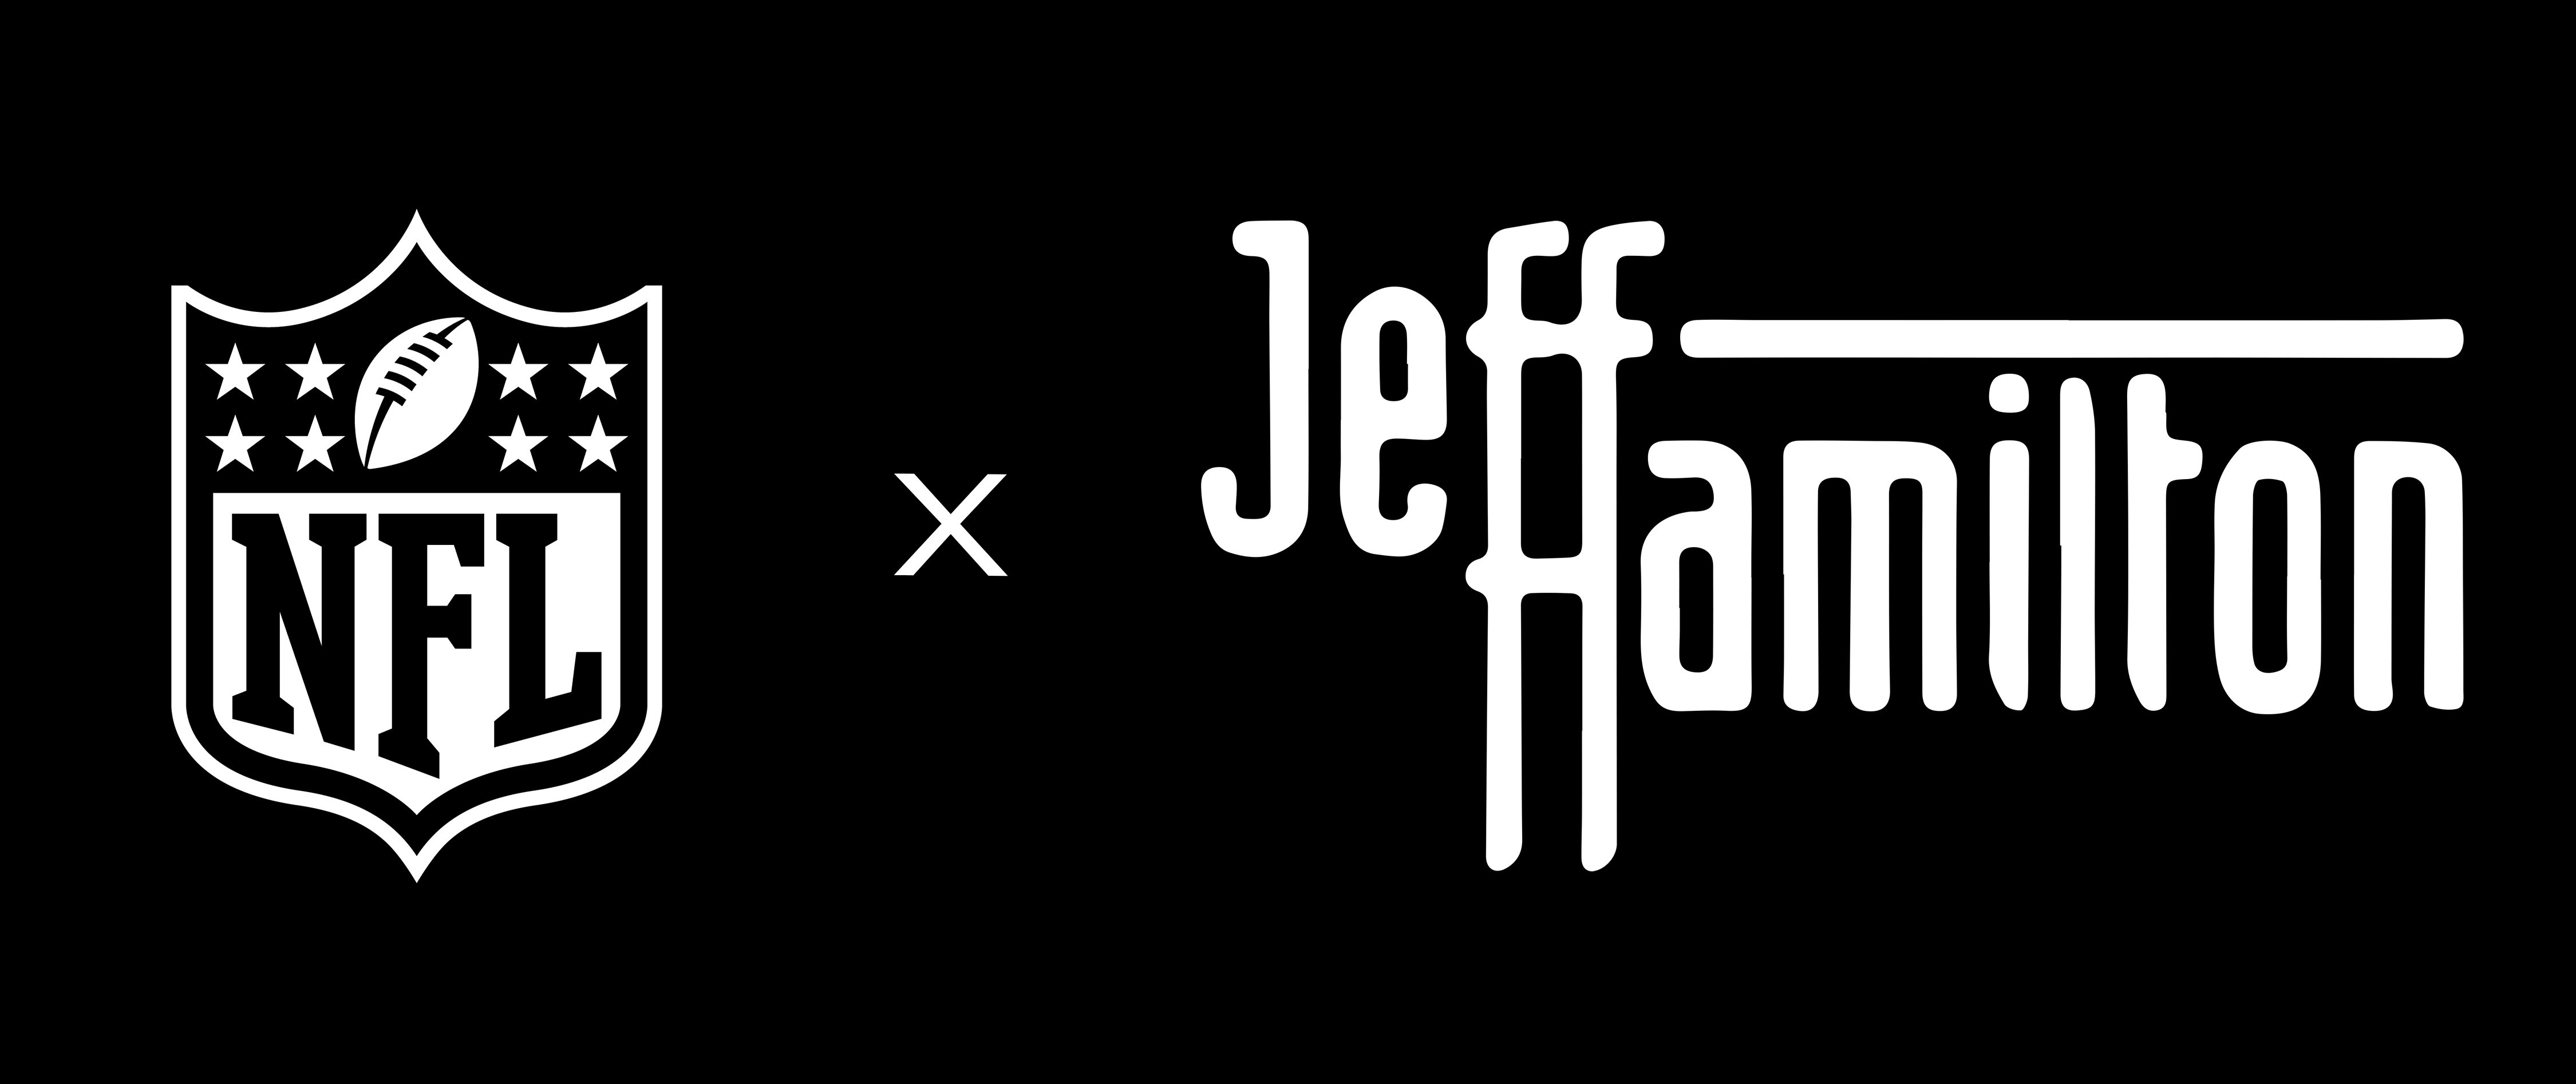 magic-nfl-jeff-hamilton-logo.jpg